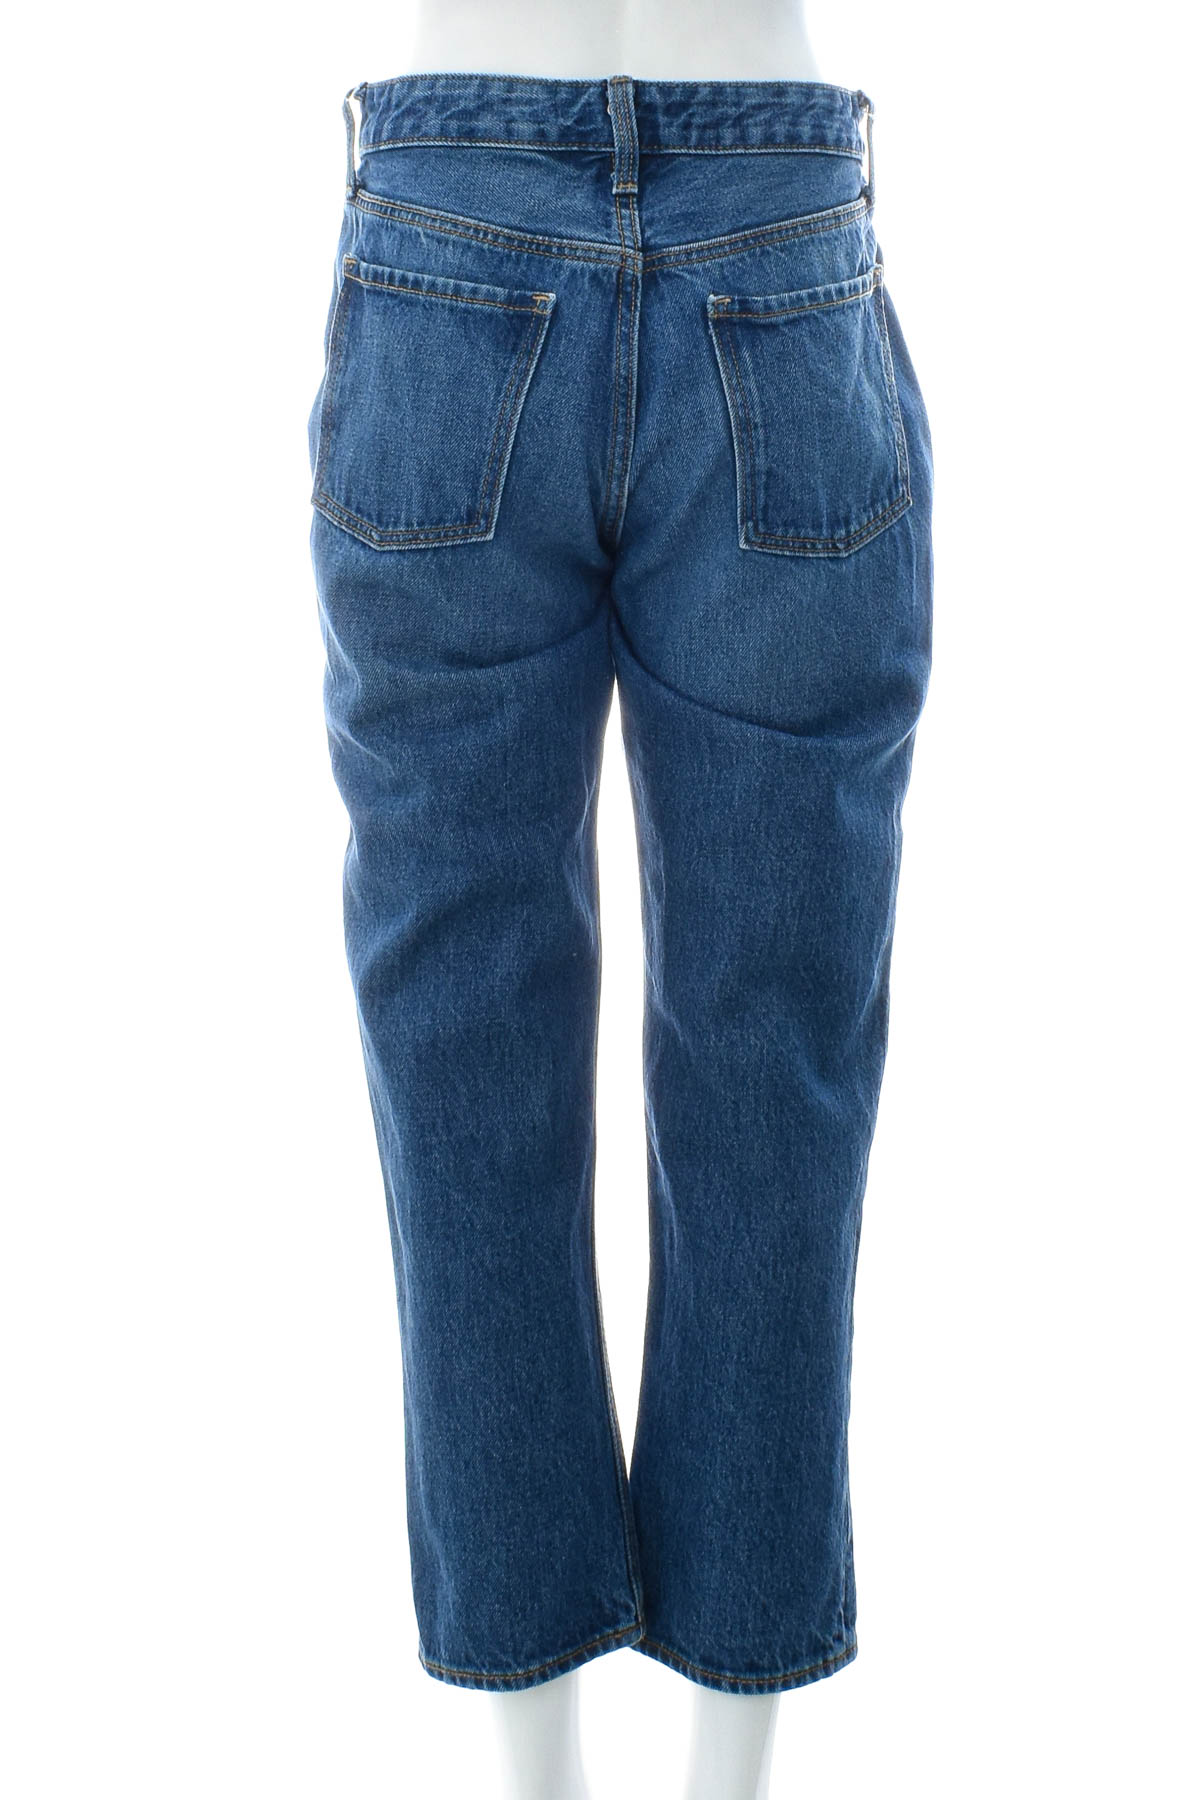 Women's jeans - OLD NAVY - 1